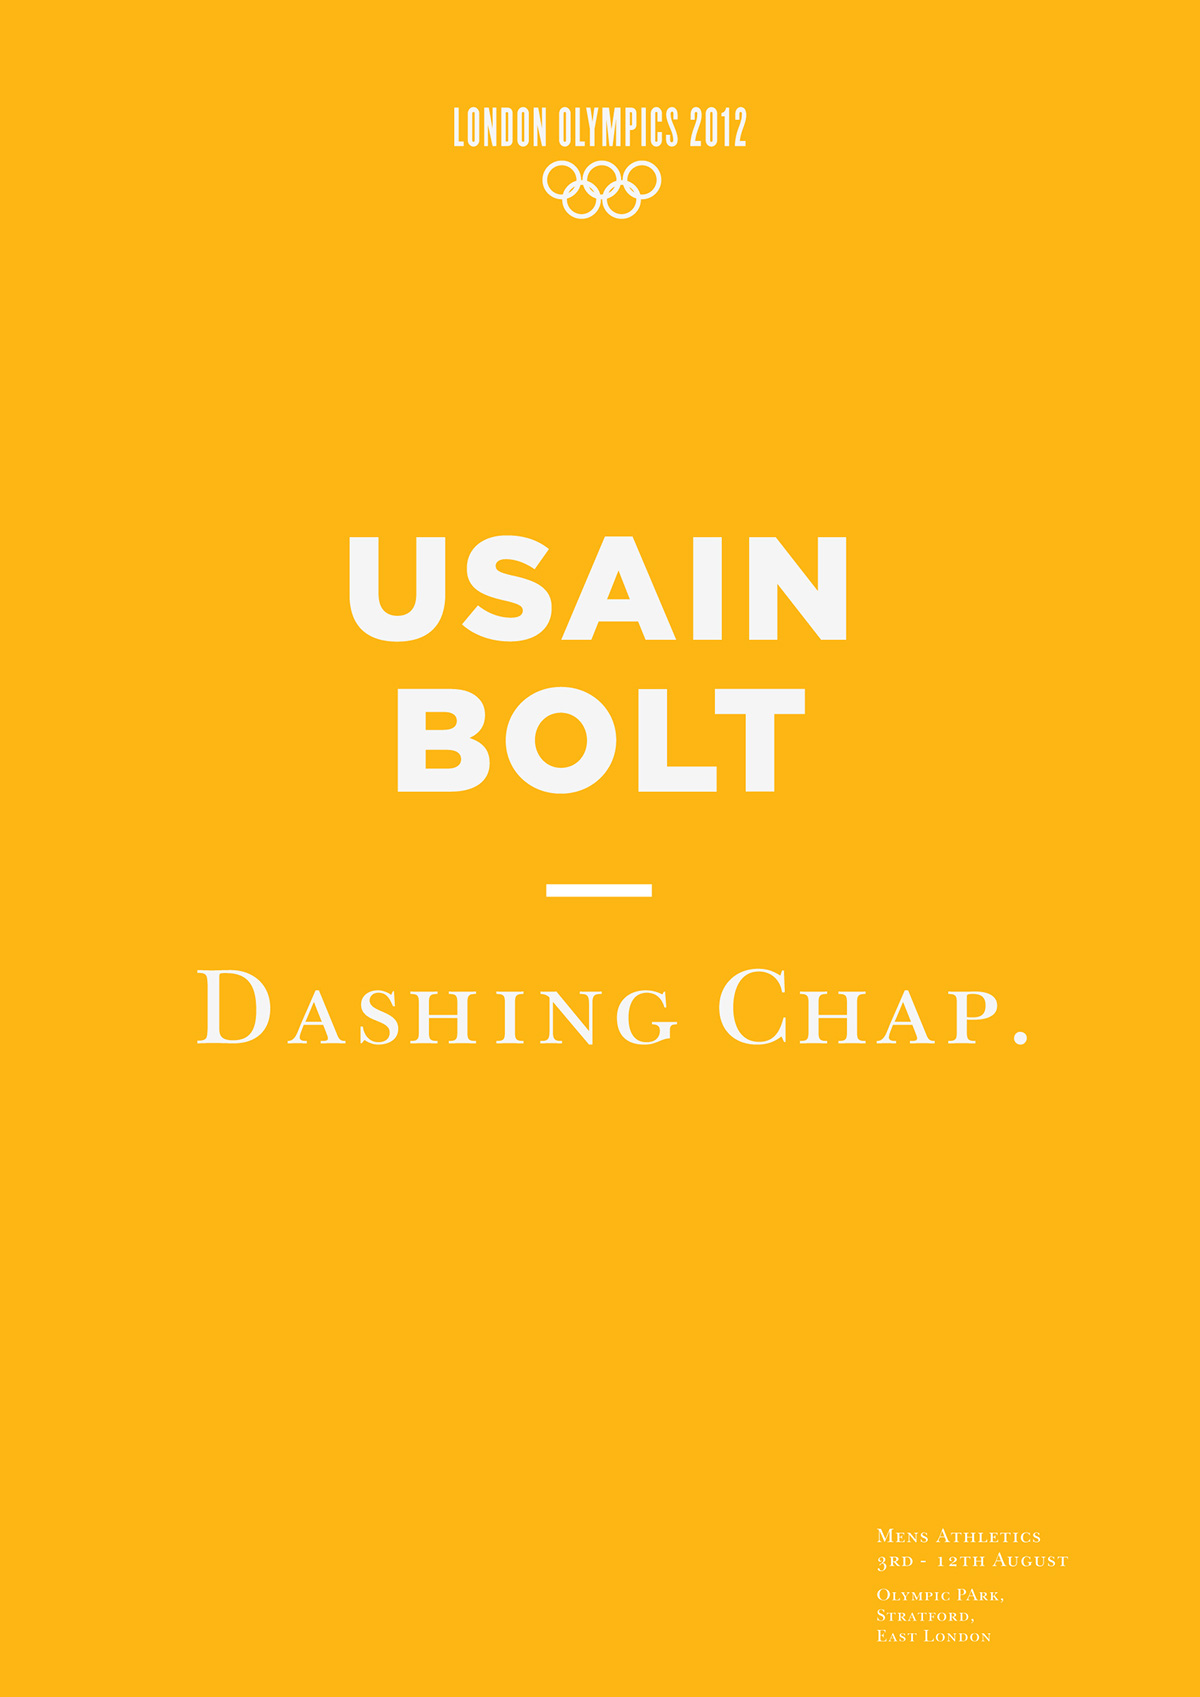 London Olympics Usain Bolt jessica ennis type Heptathlon sprint gold medal Medal xxx gold jess ennis track poster